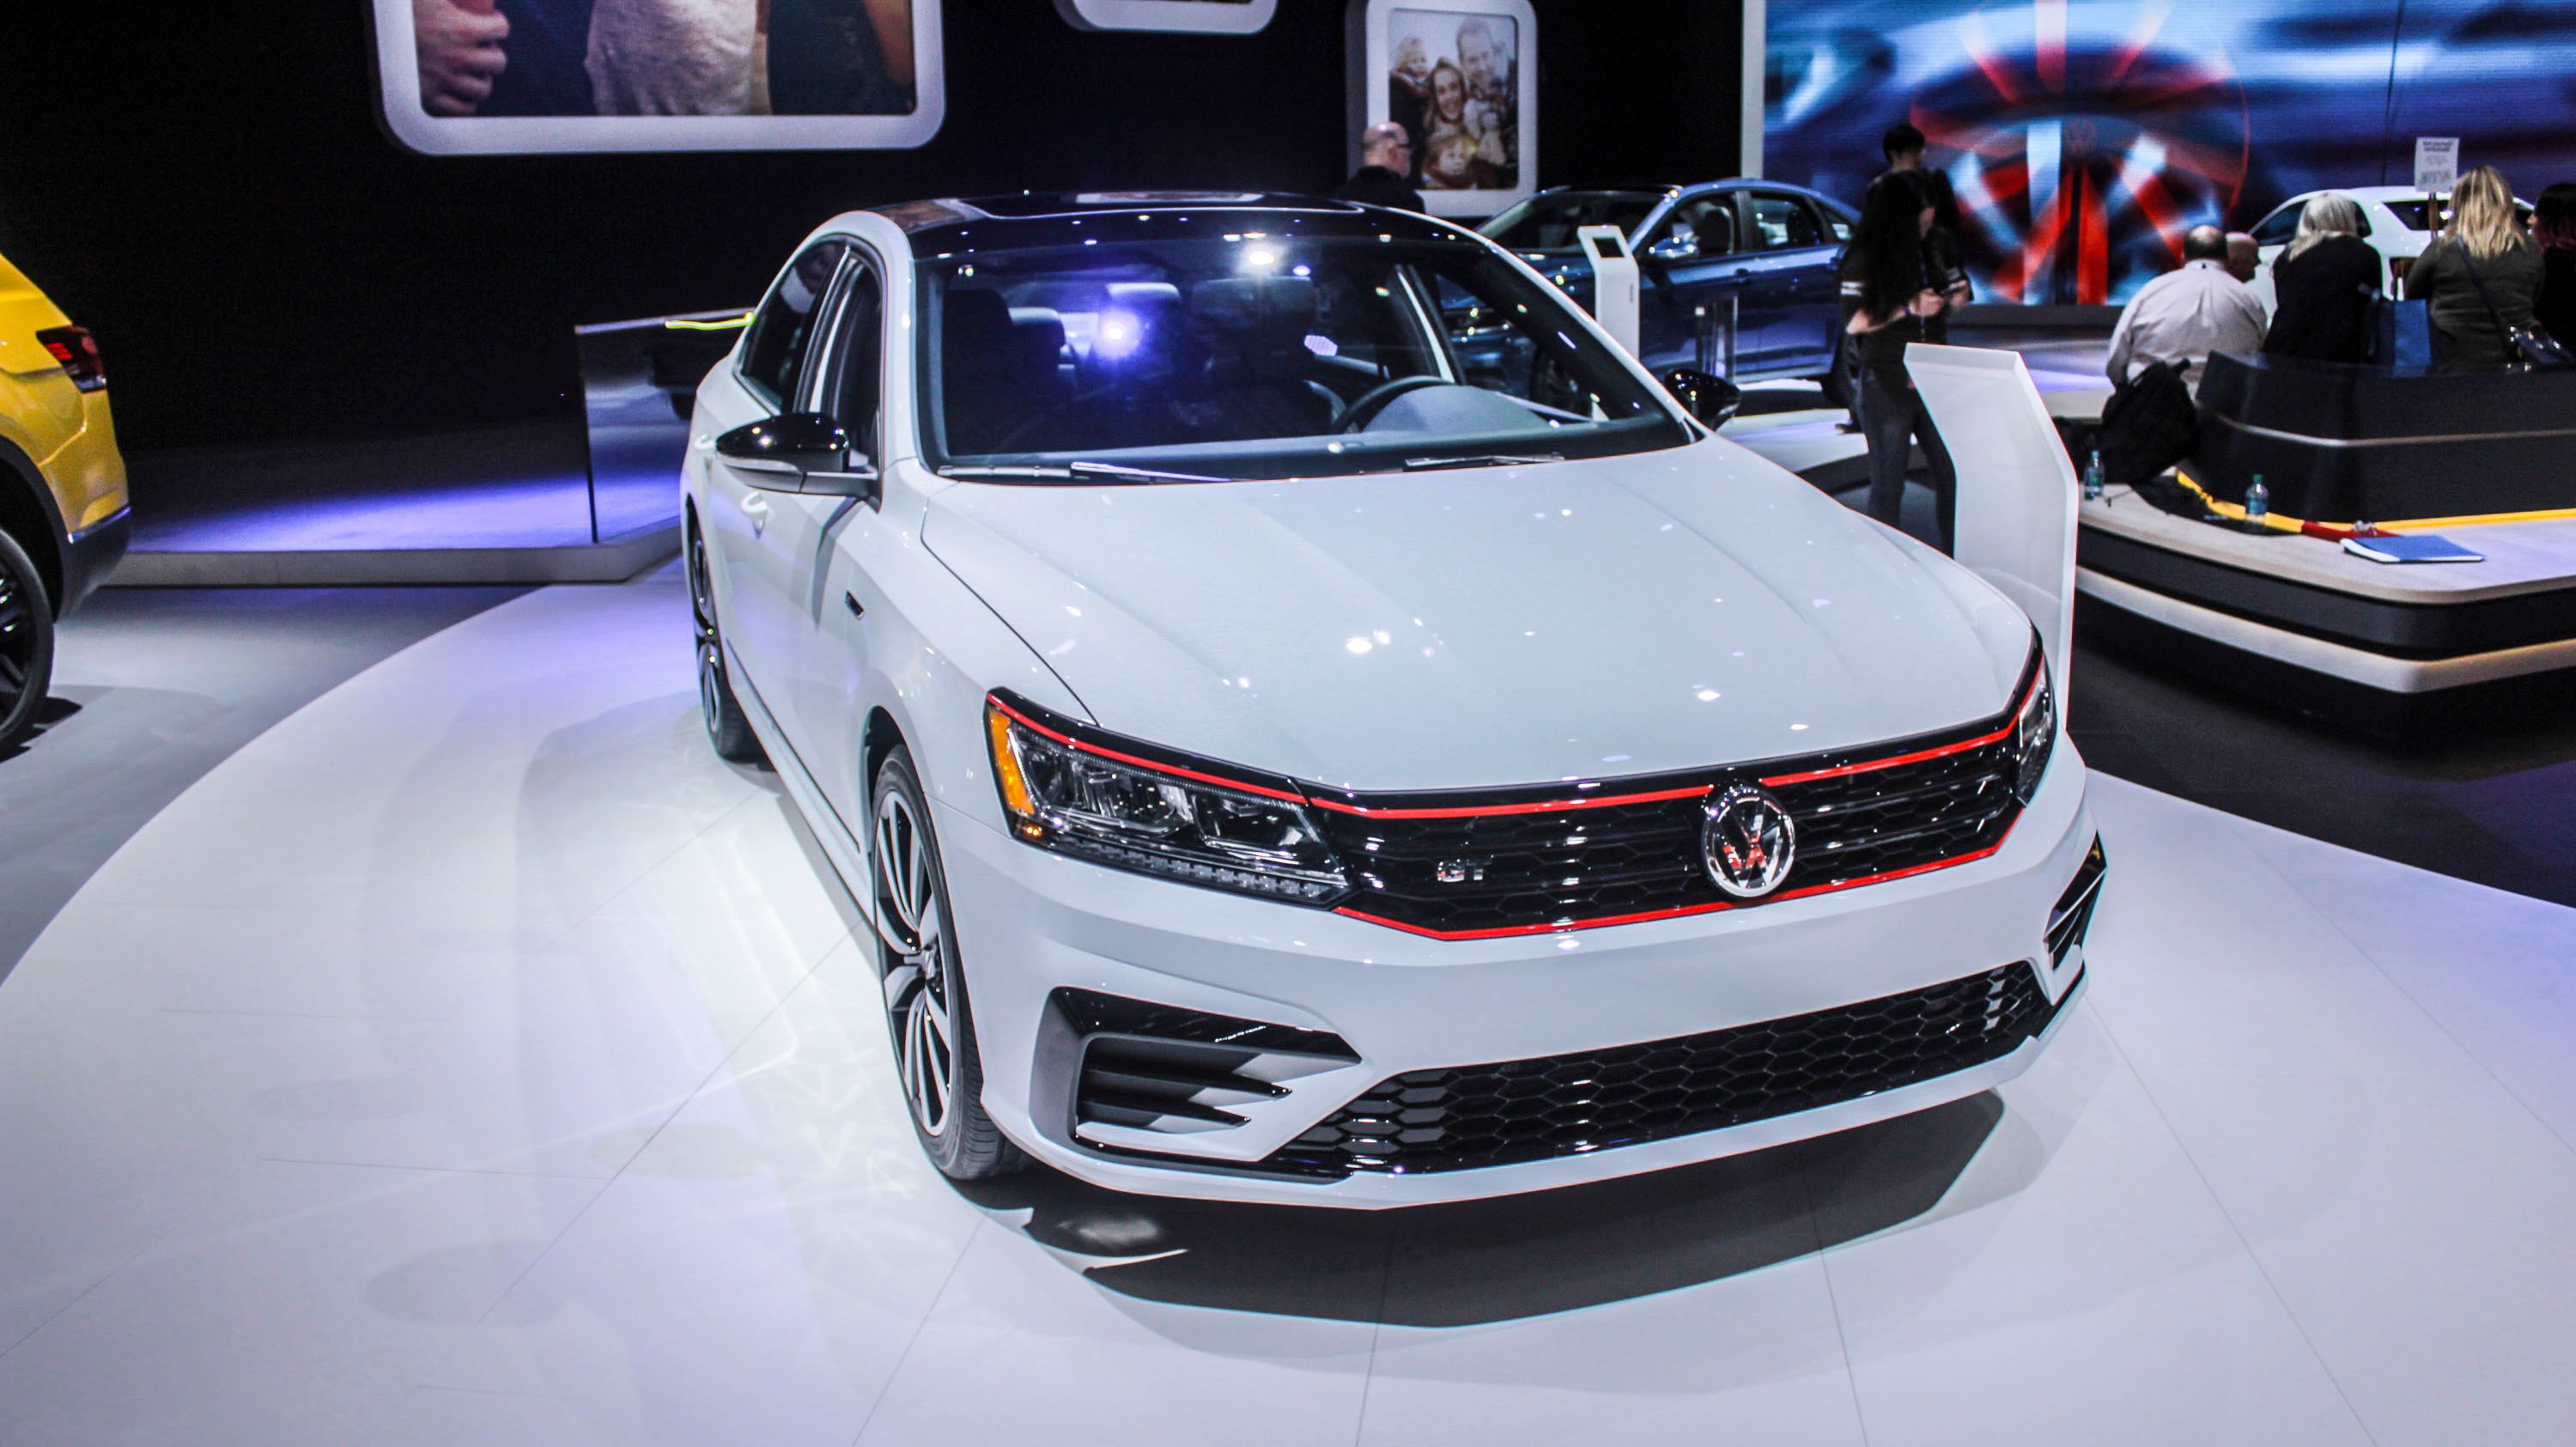 2018 Volkswagen Passat Gets GTI Treatment in Detroit, Sans the Big Horsepower